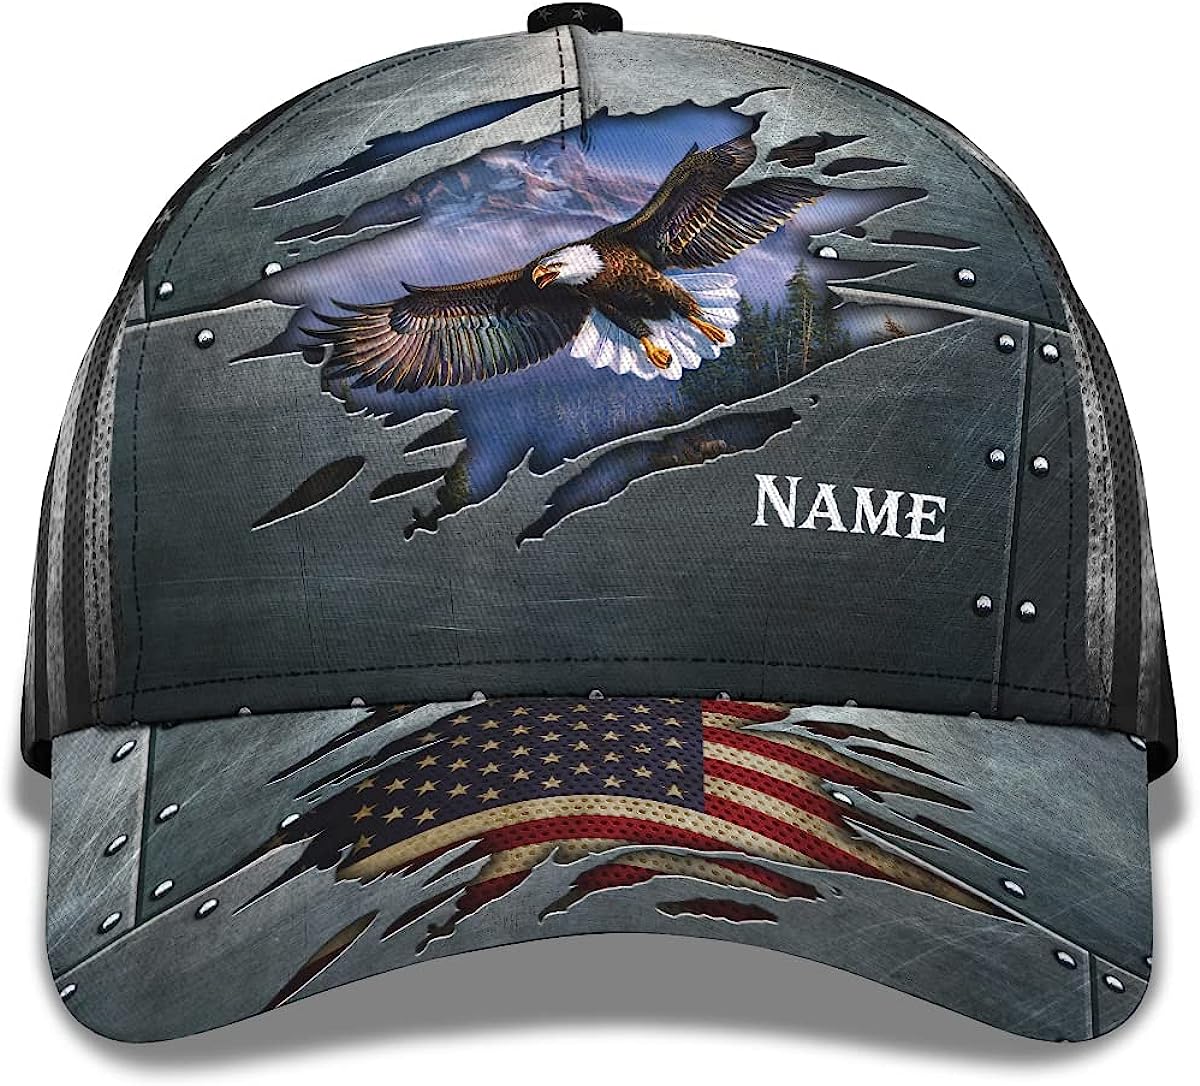 Patriotic Bald Eagle With Us Flag Custom Name All Over Print Baseball Cap - Christian Hats For Men Women